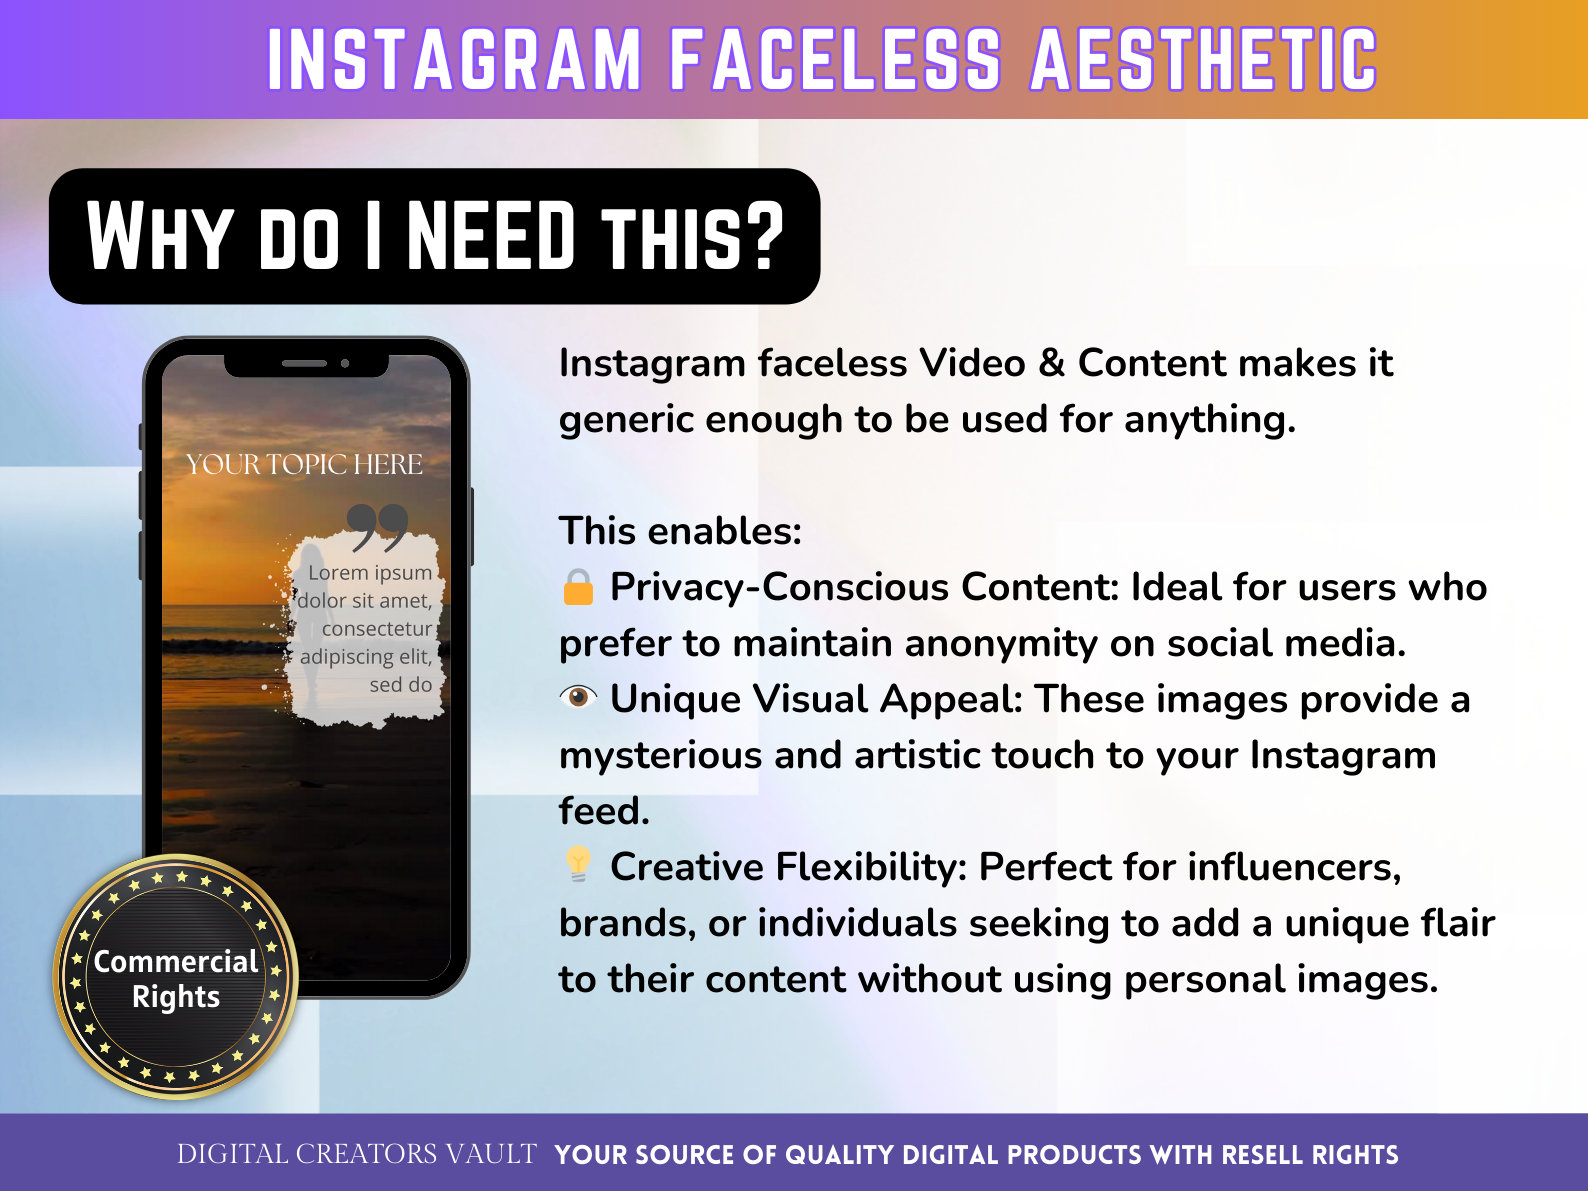 50+ Faceless Instagram Reel Templates, Aesthetic Reels